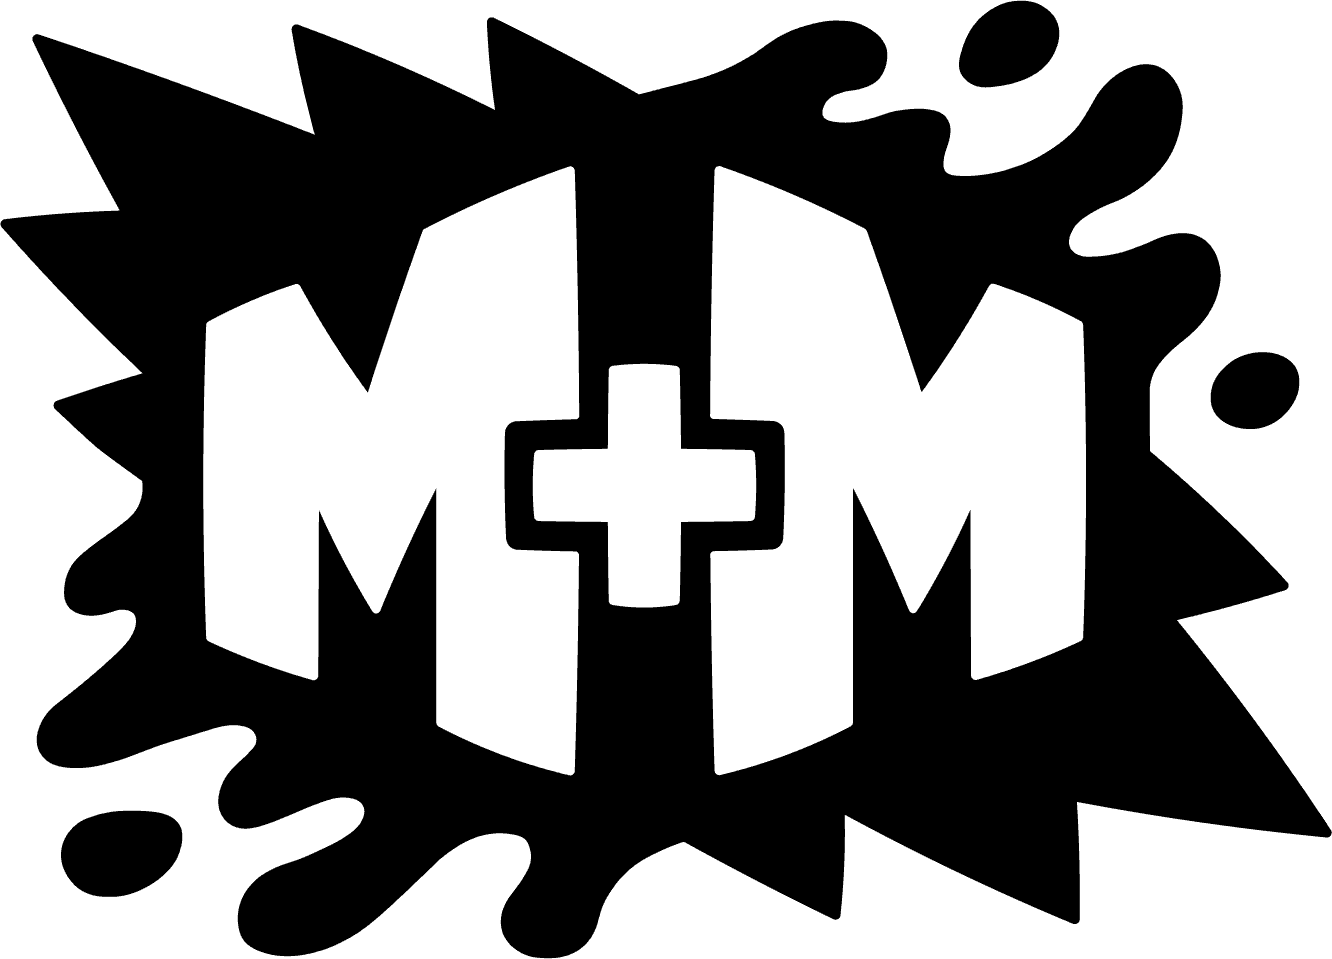 The M+M logo